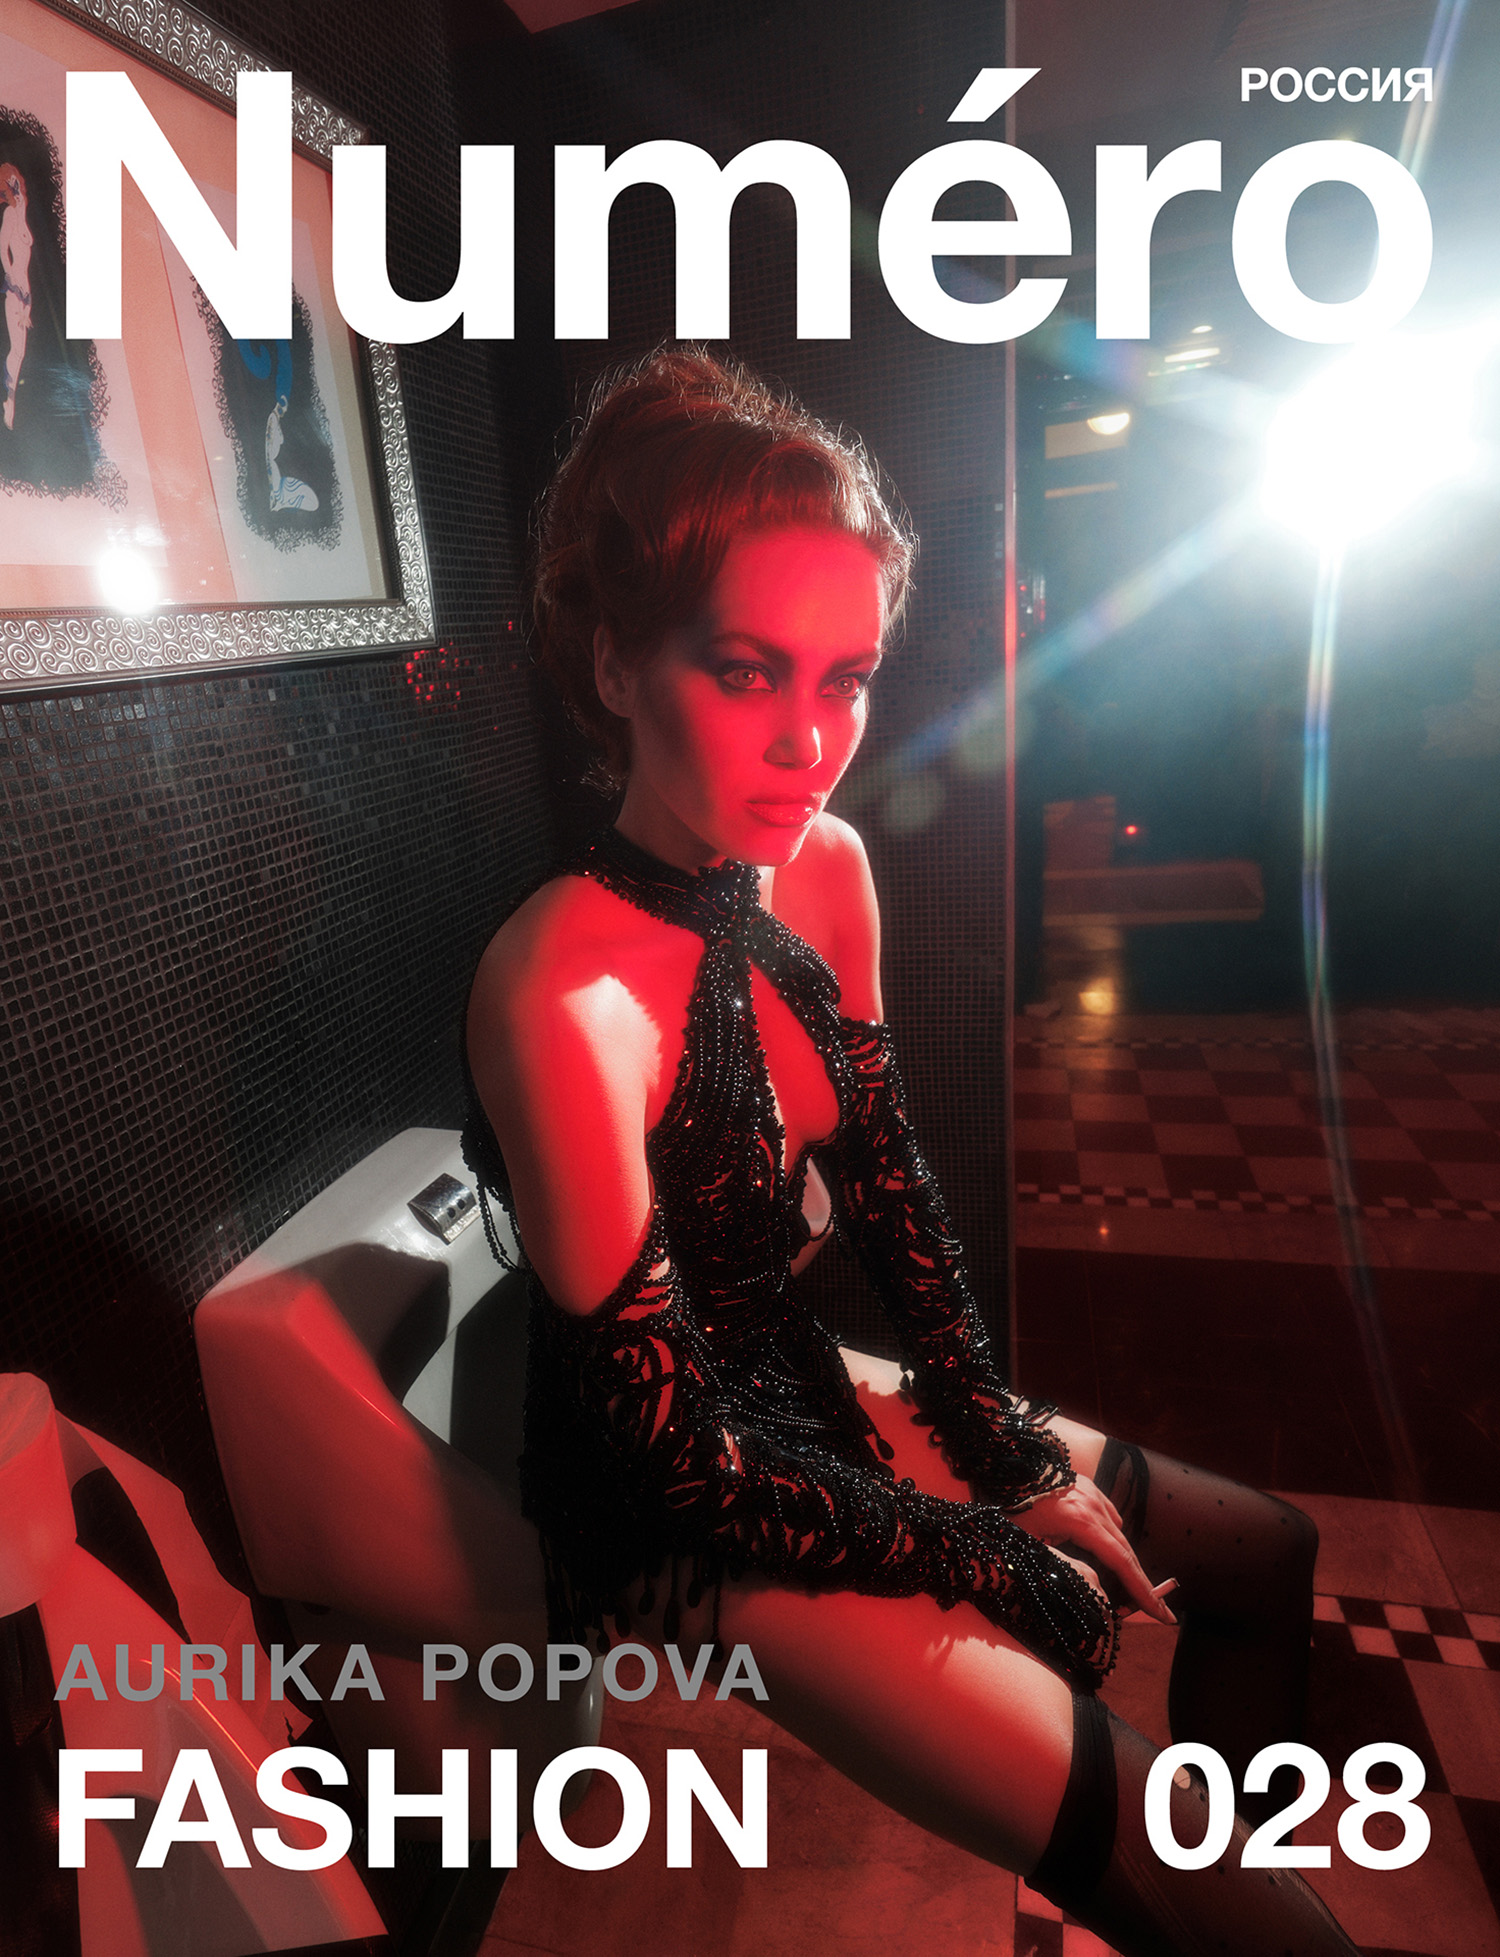 Aurika Popova covers Numéro Russia Issue 028 by Benjamin Kanarek